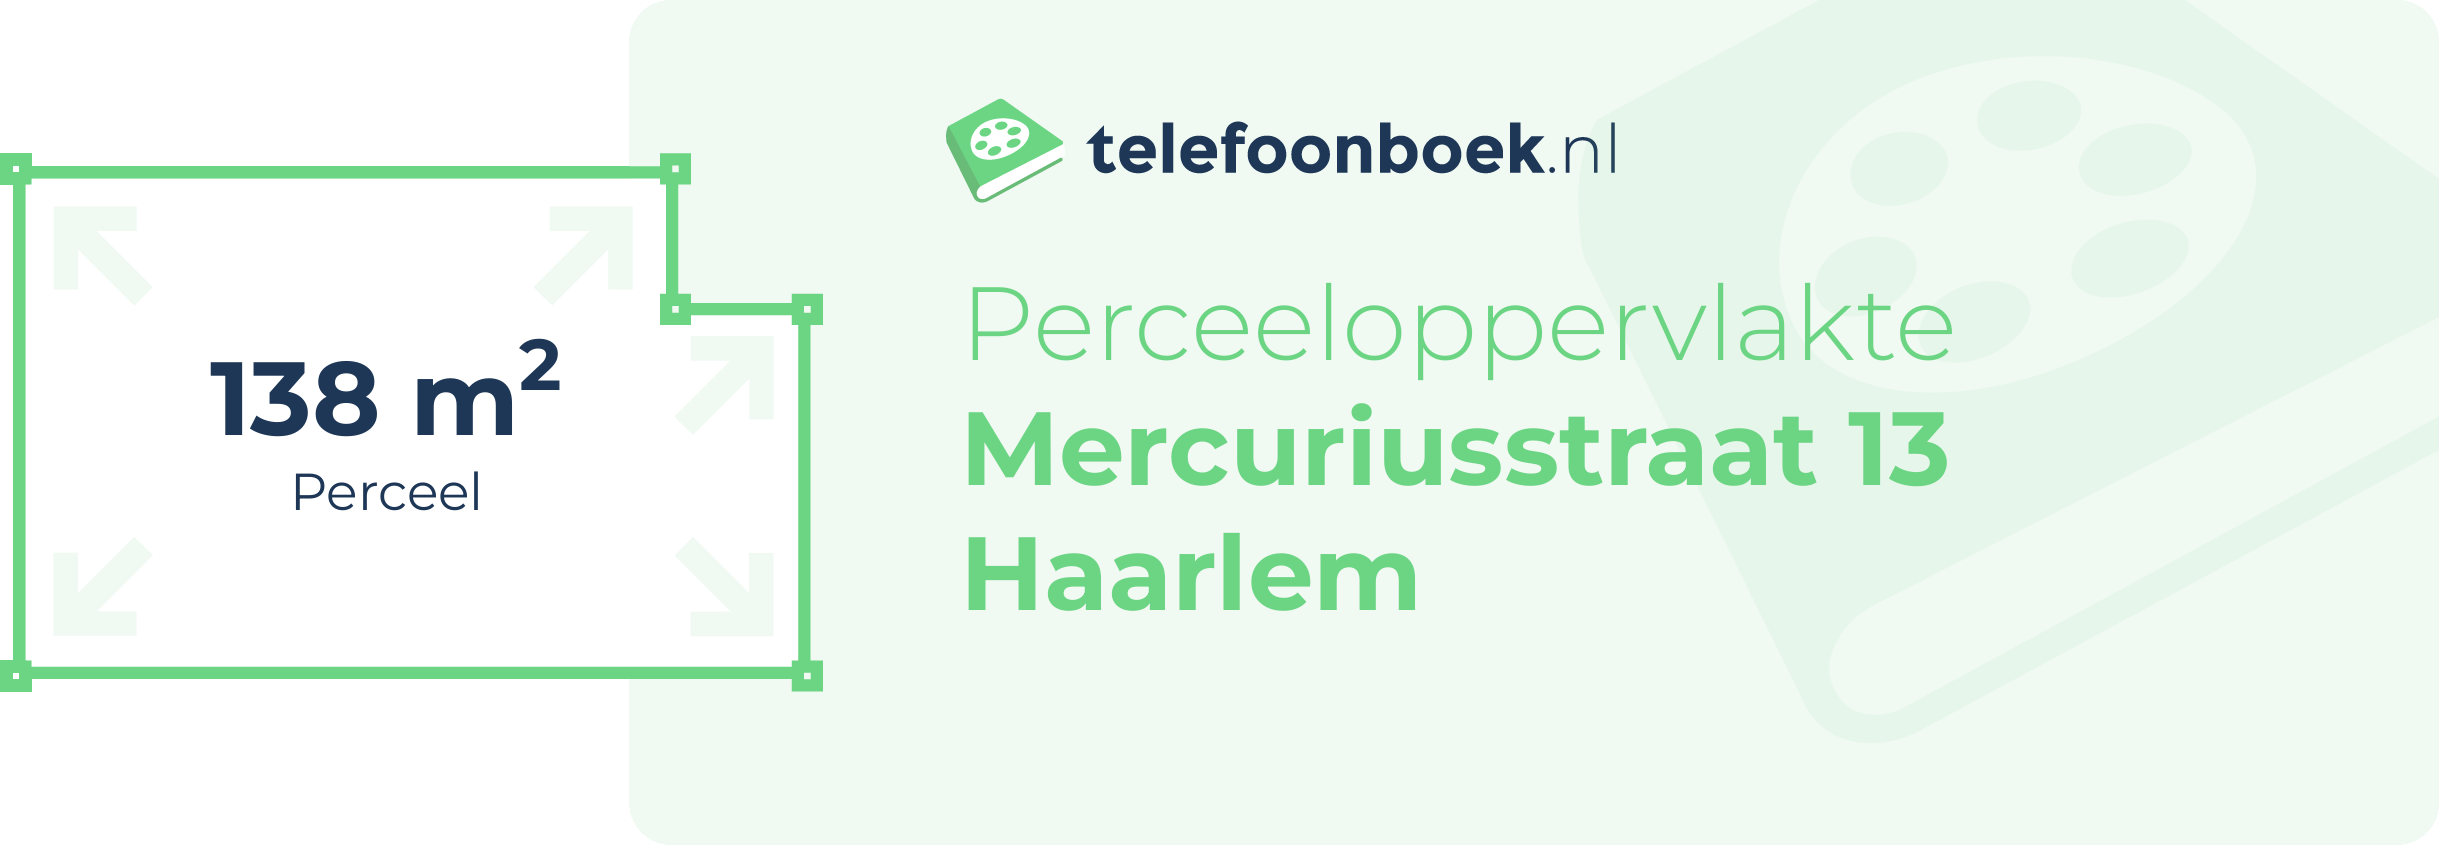 Perceeloppervlakte Mercuriusstraat 13 Haarlem